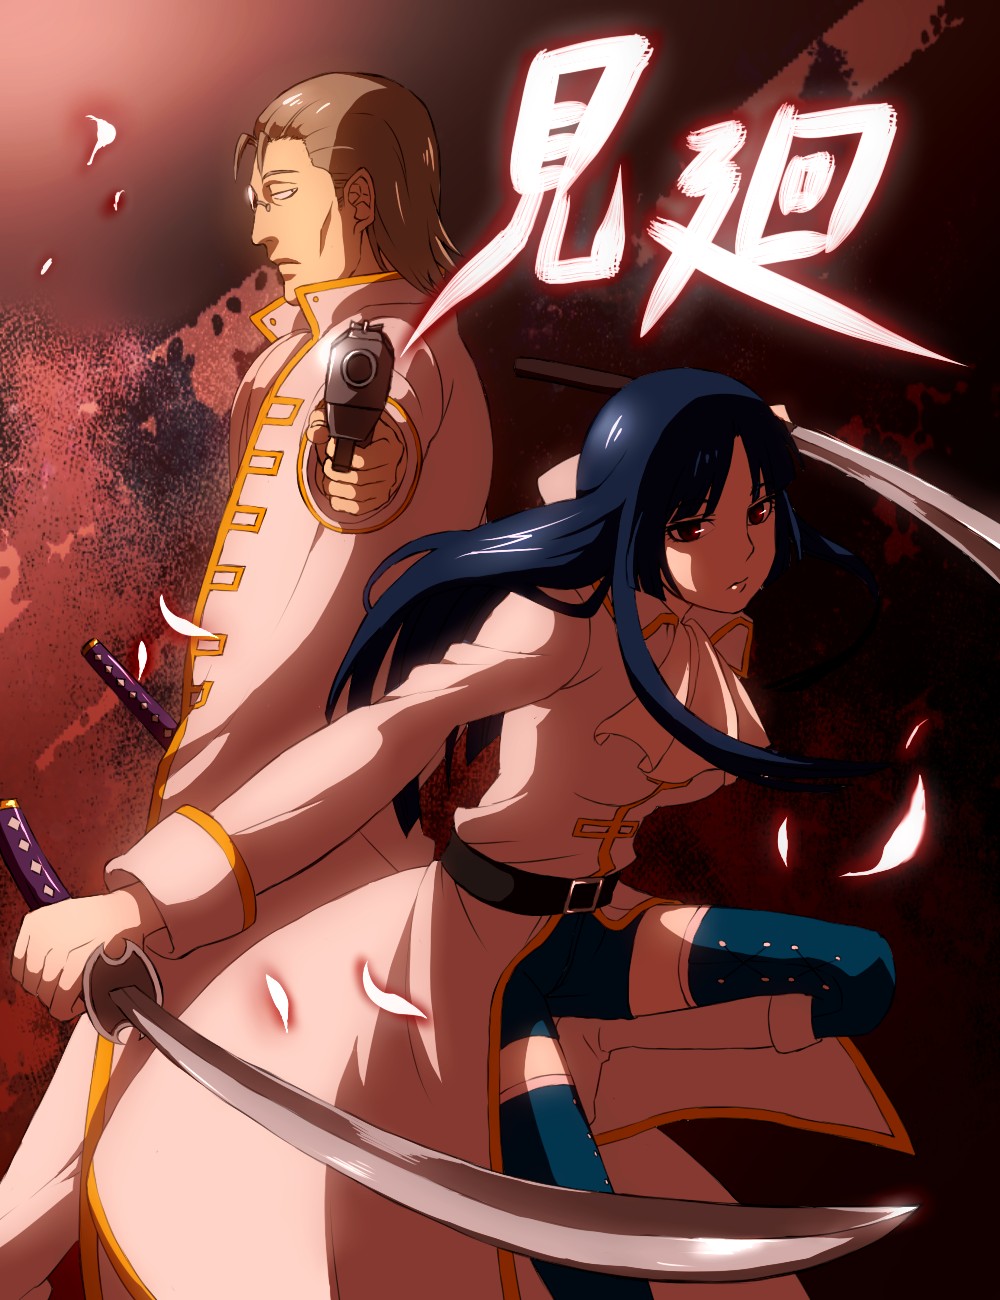 Anime 1000x1300 Gintama Imai Nobume Sasaki Isaburo anime girls anime sword weapon blue hair long hair women with swords gun aiming